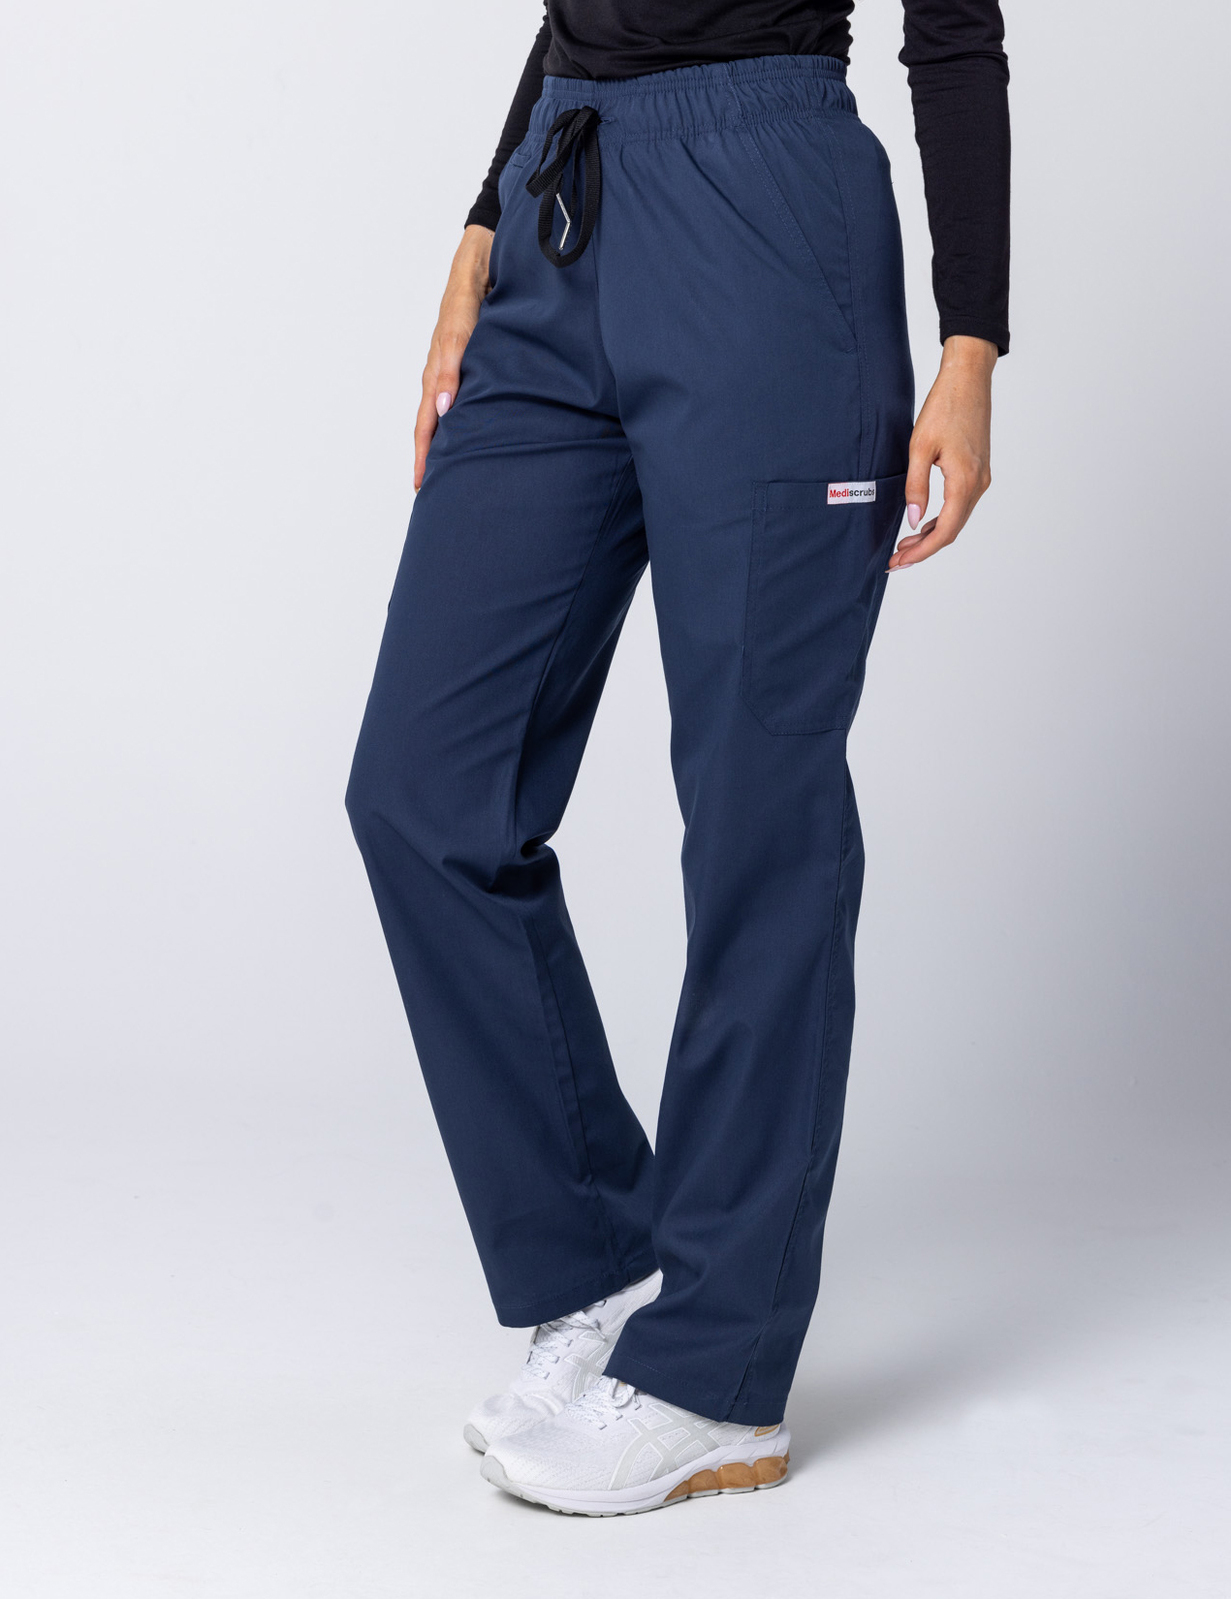 Women's Cargo Performance Pants - Navy - 5x Large